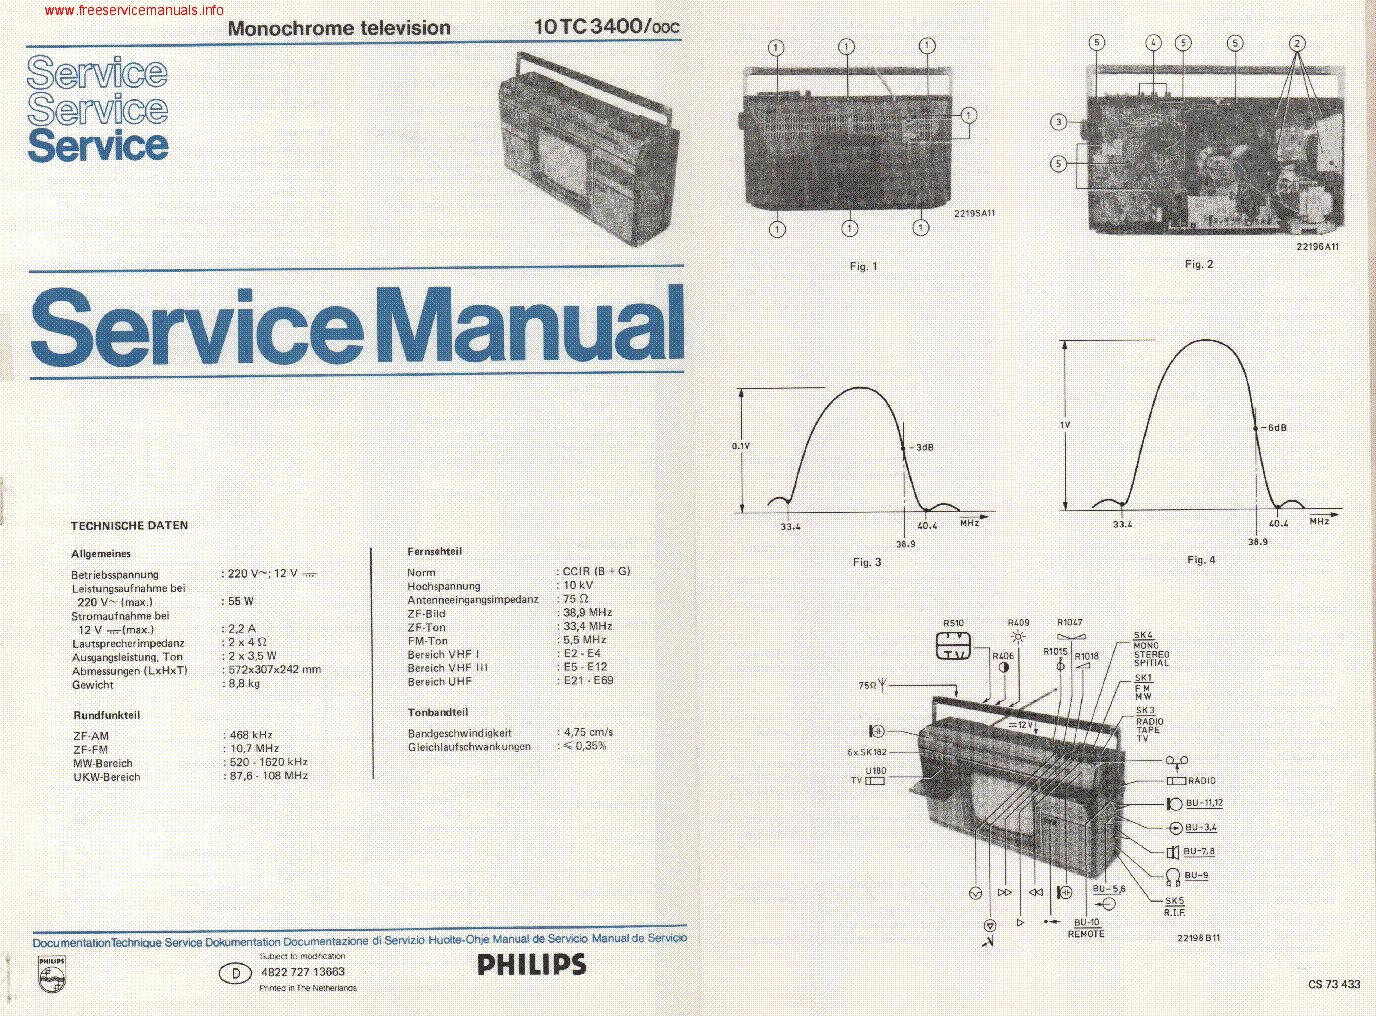 PHILIPS 10TC3400 MONOCHROME TV service manual (1st page)